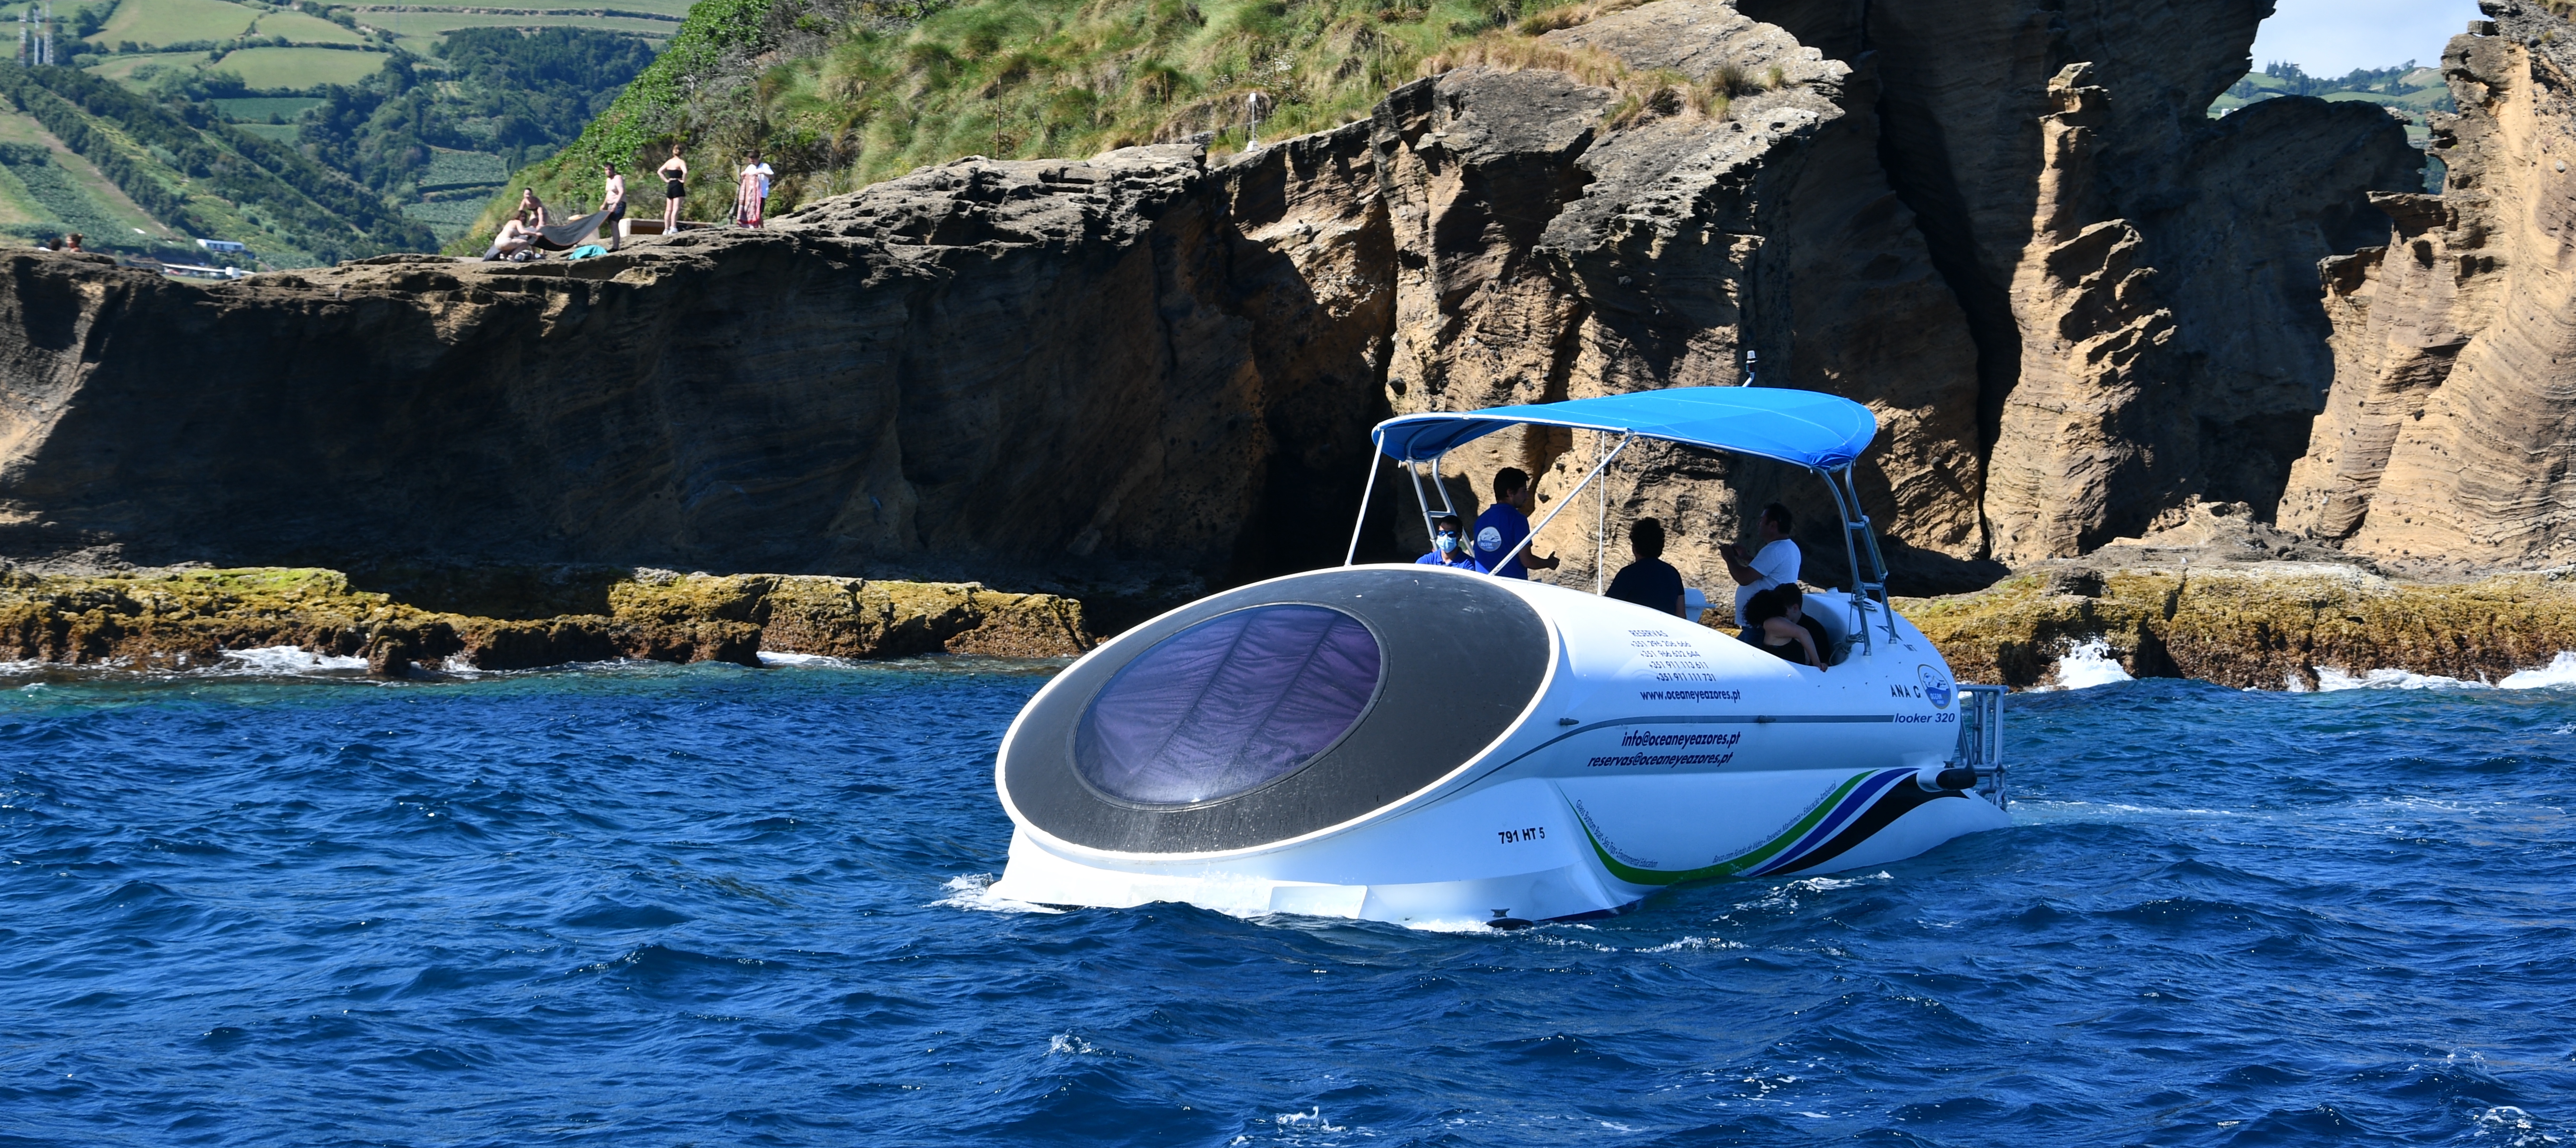 Private Glass Bottom Boat Tour in Azores